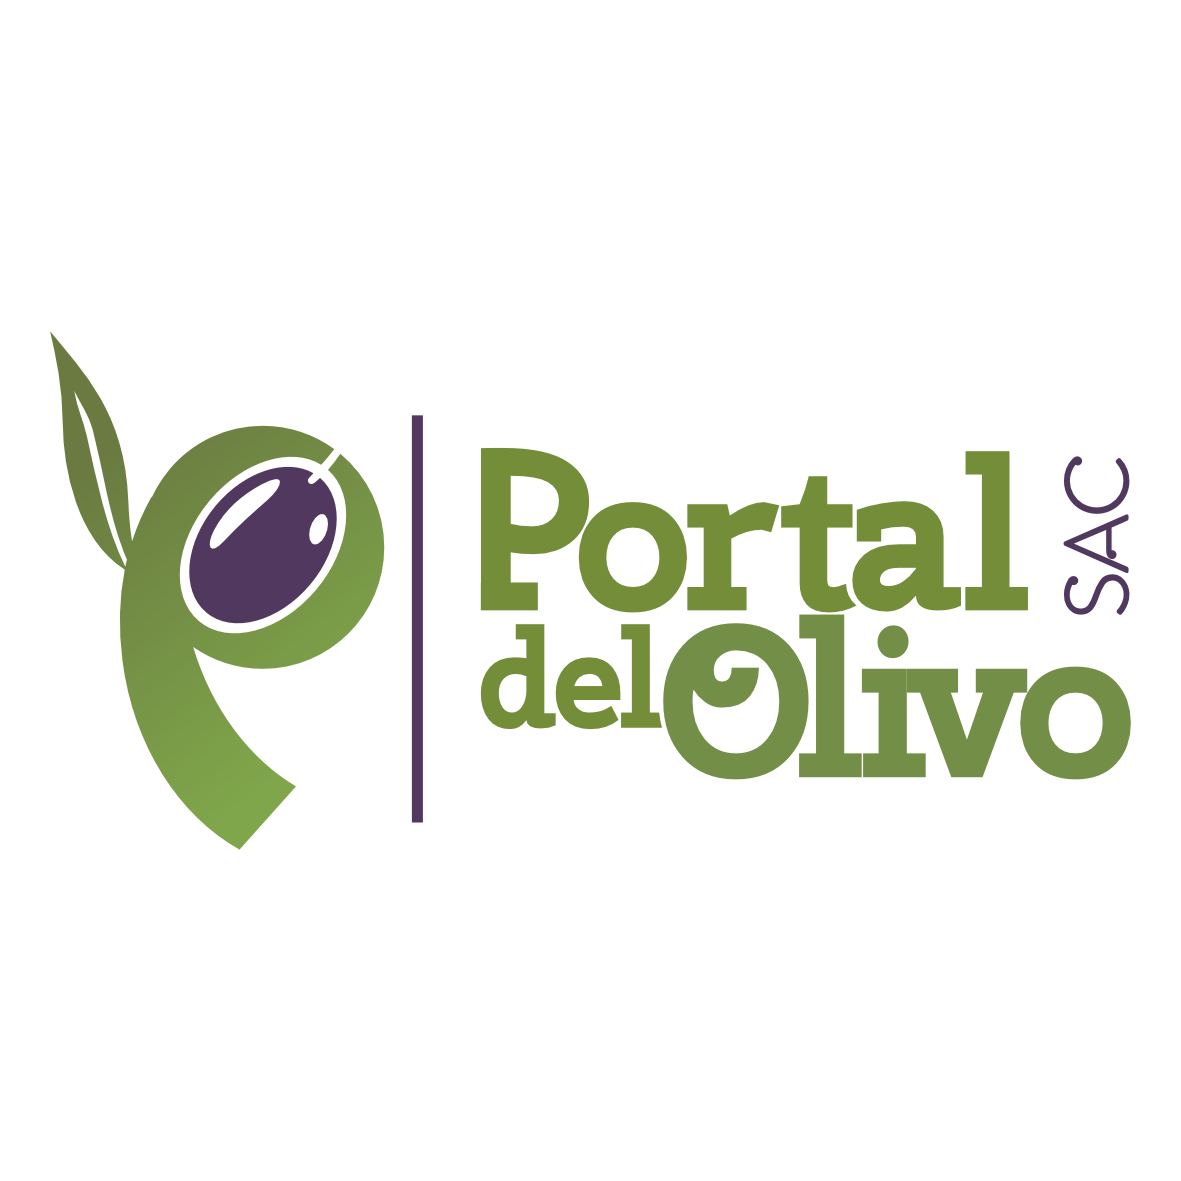 portal del olivo